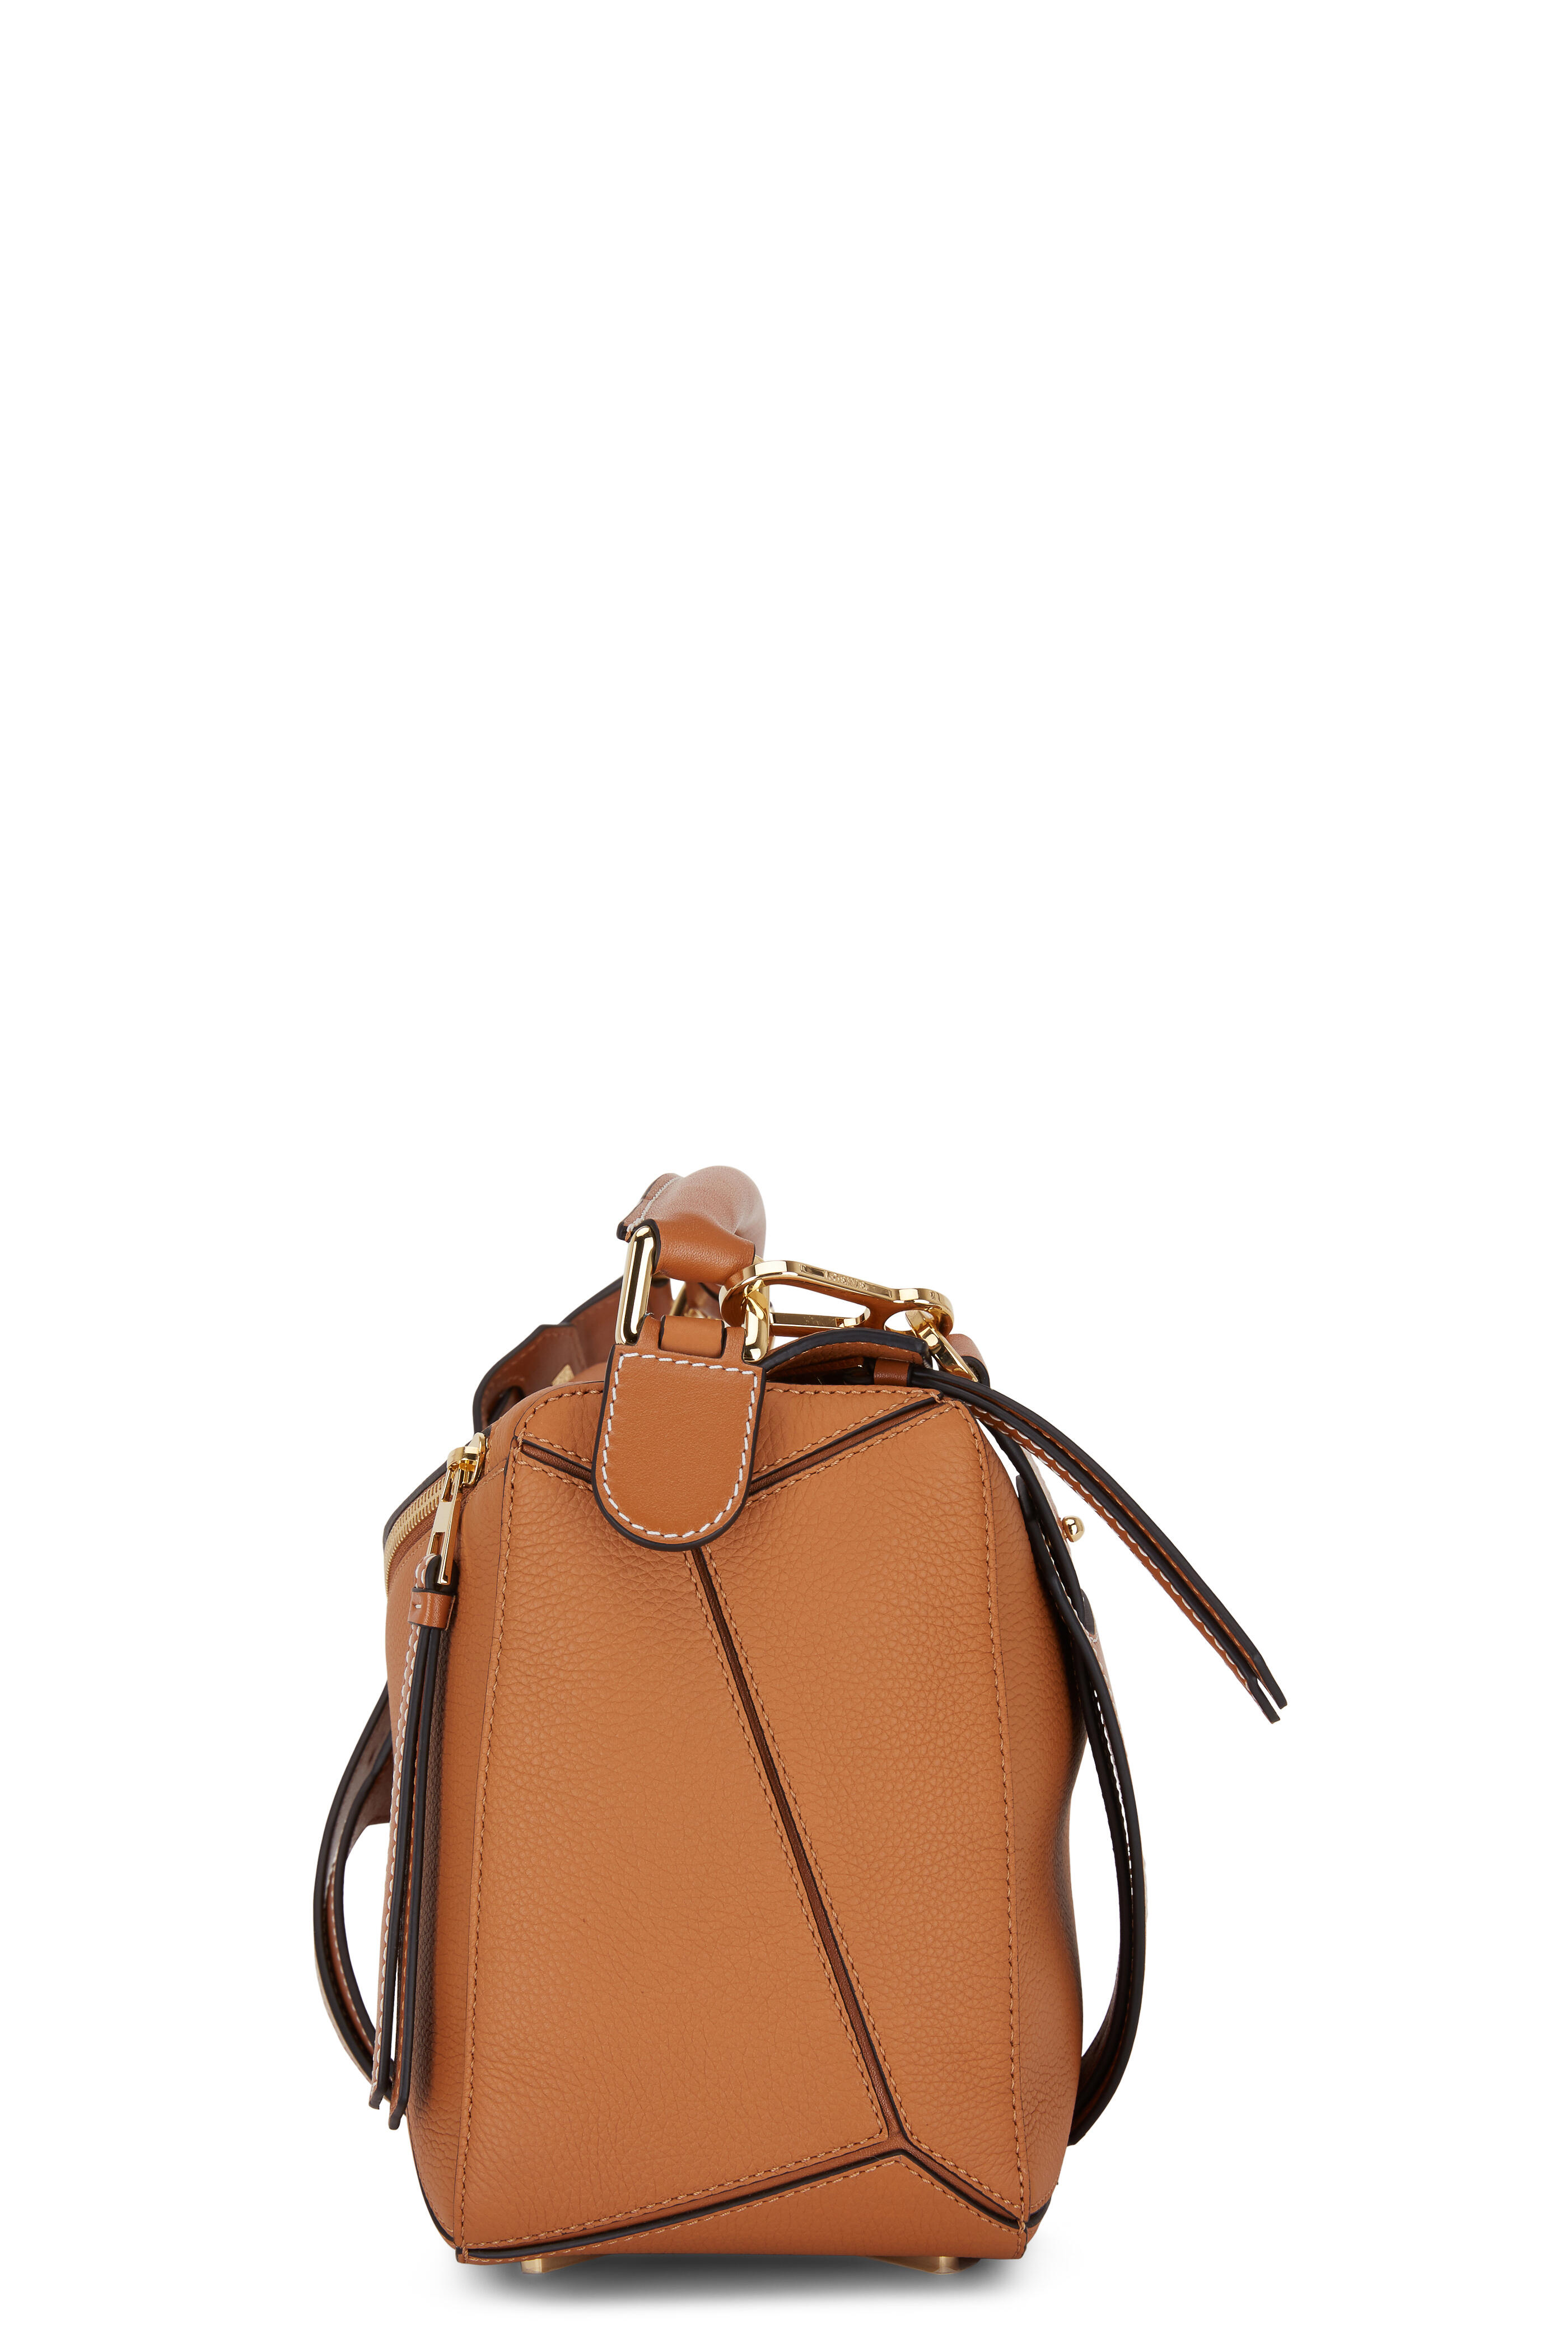 Loewe - Puzzle Caramel Leather Top Handle Bag